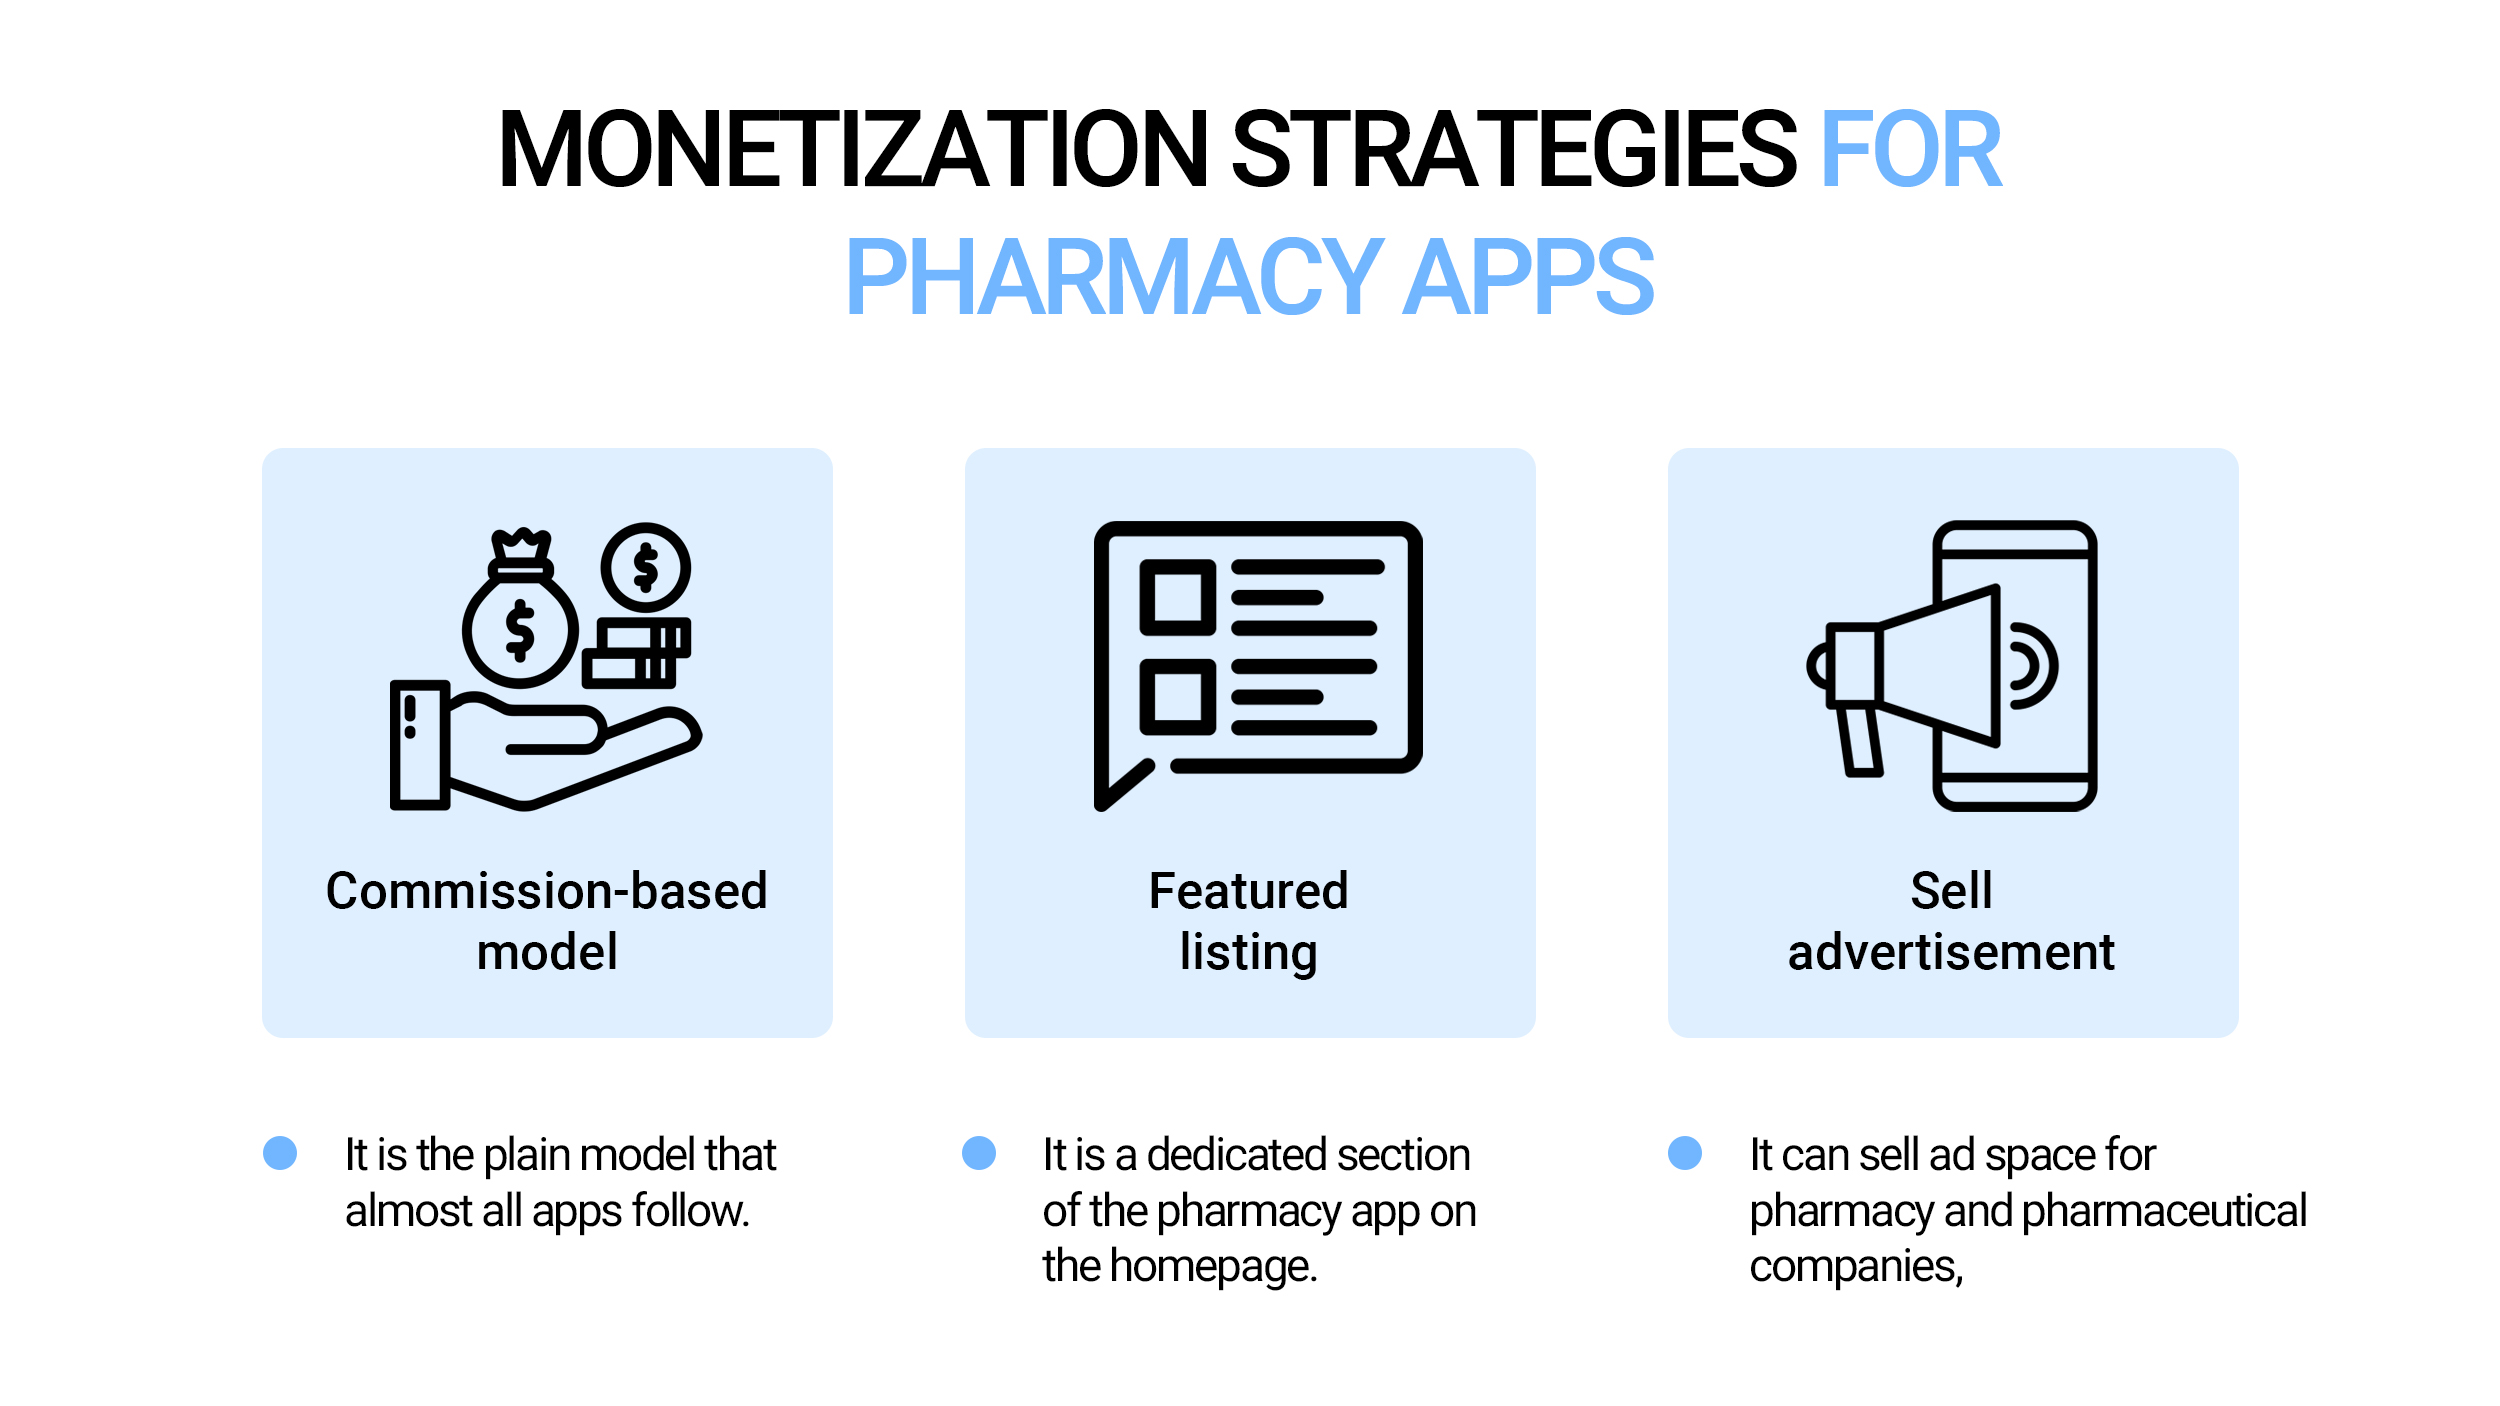 Monetization strategies for pharmacy apps